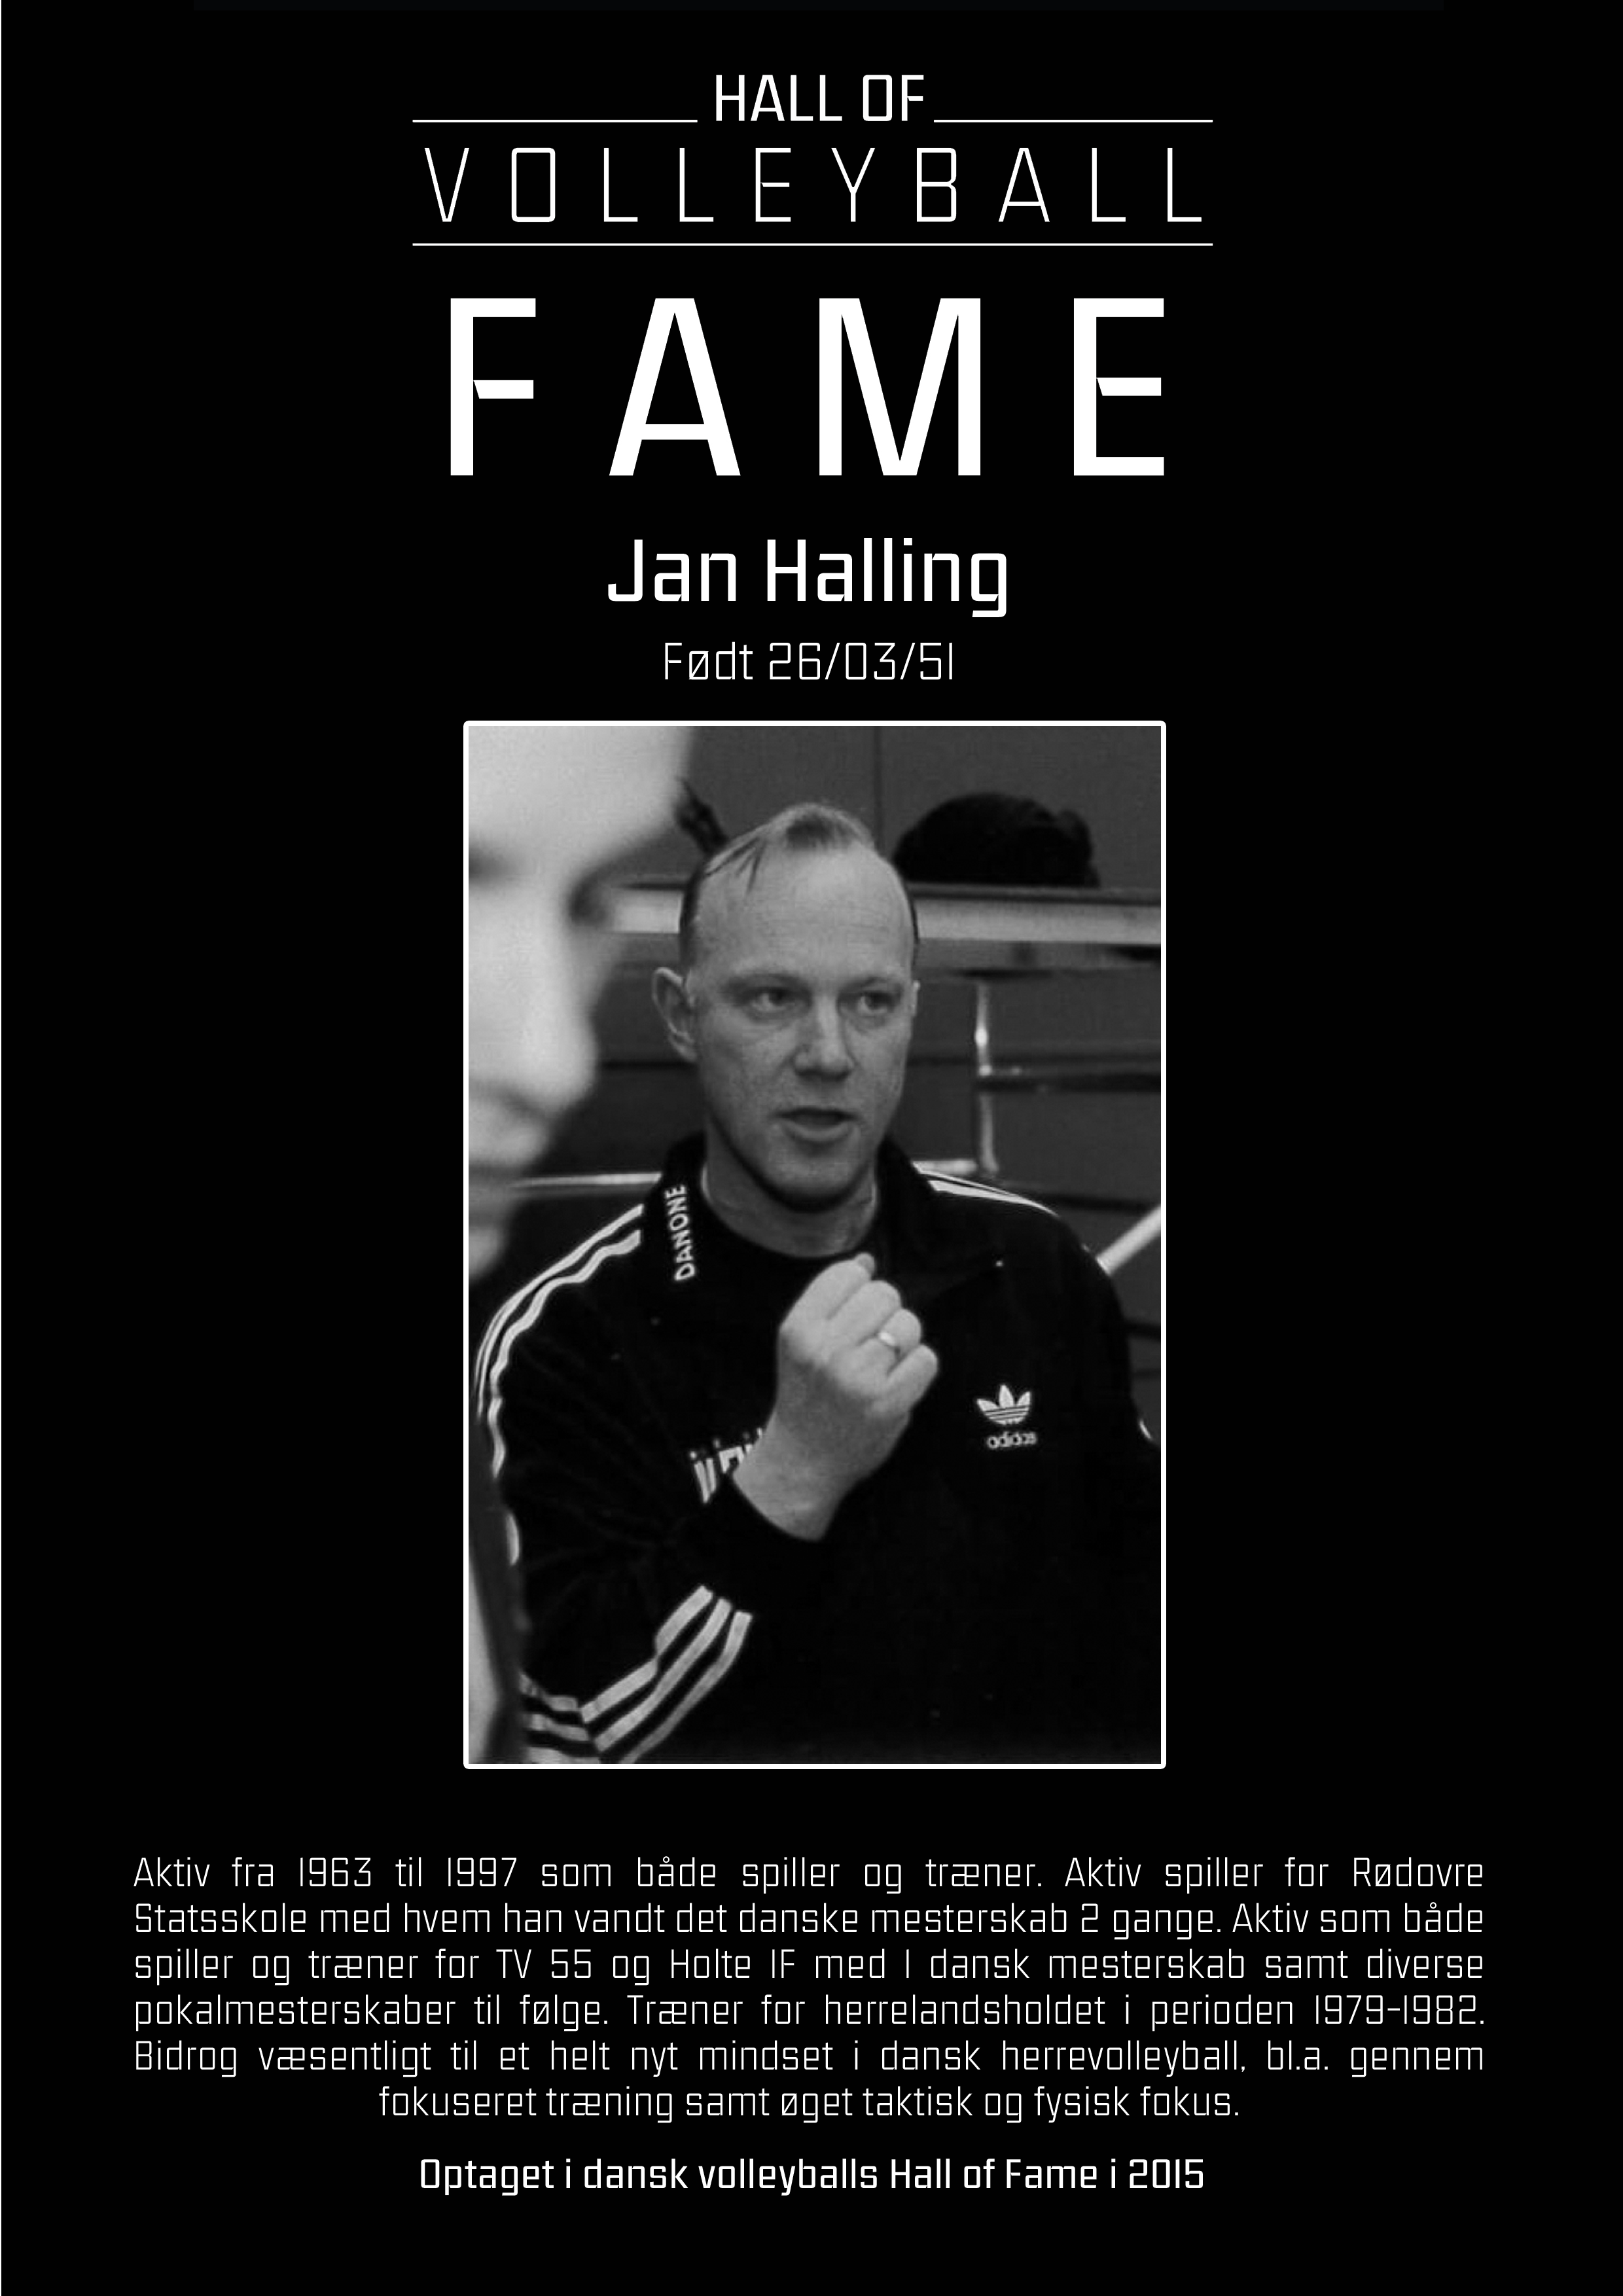 Jan Halling